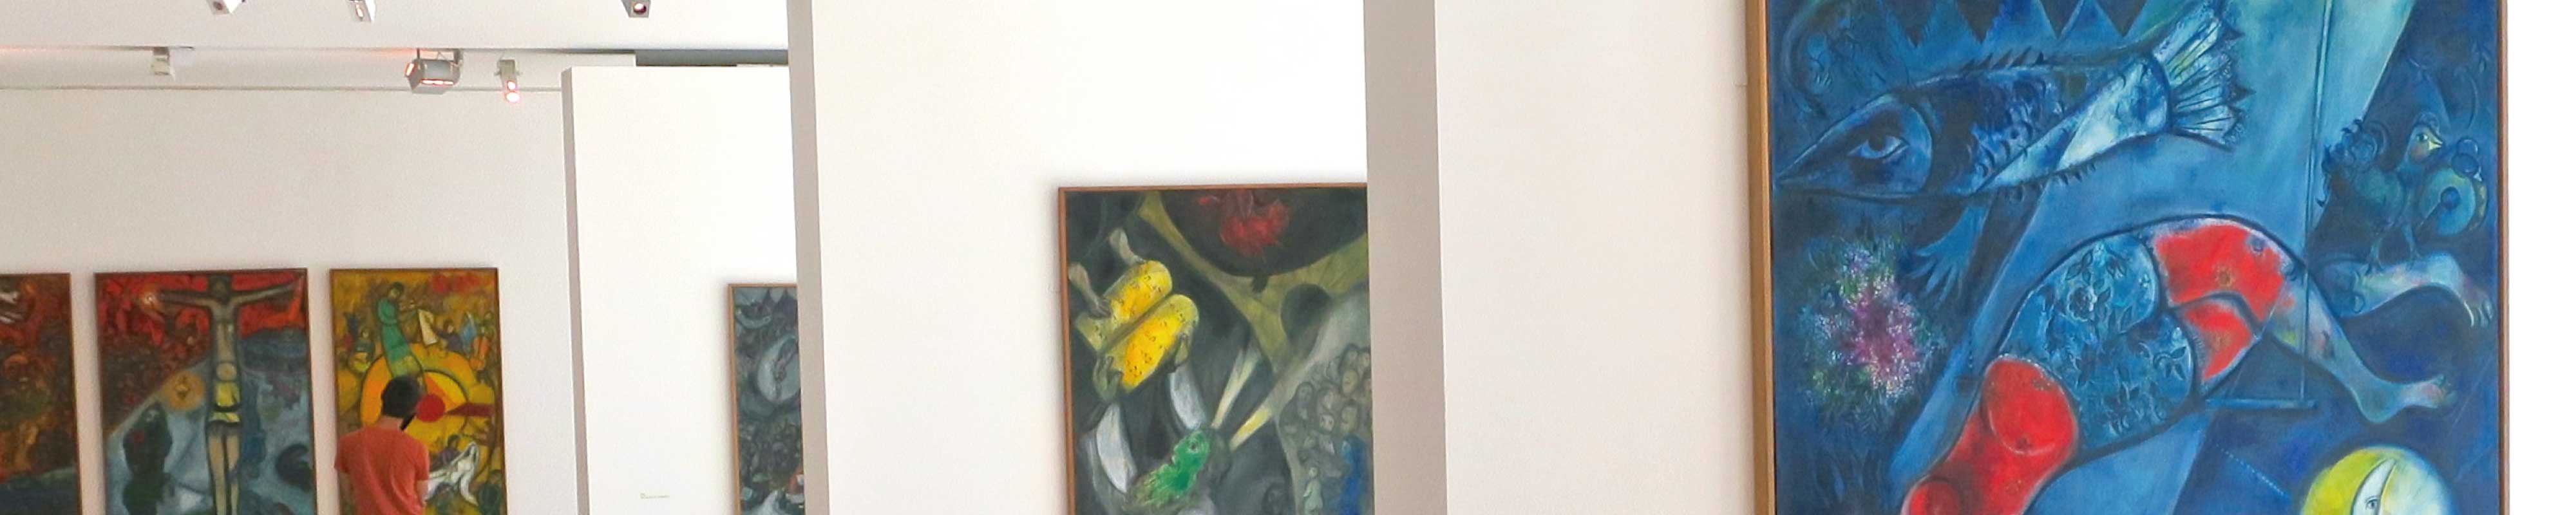 Consigna Equipaje | Museo Chagall en Niza - Nannybag